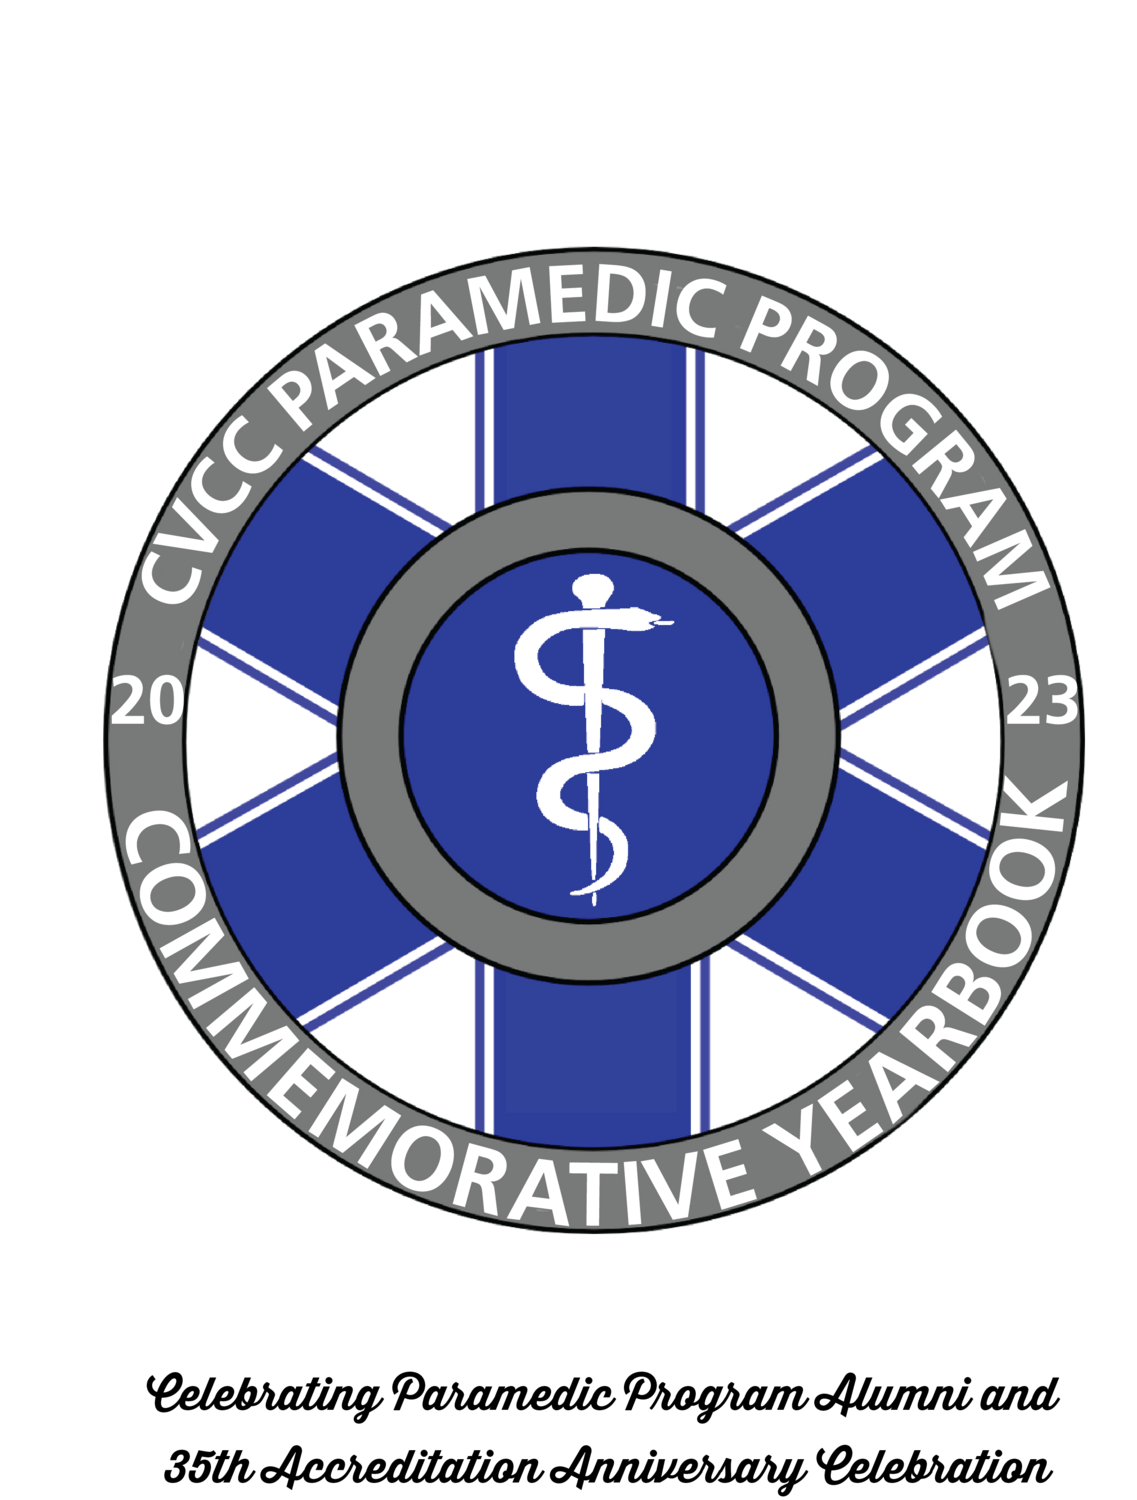 CVCC Paramedic Program Commemorative Yearbook 1991-2022 and Beyond